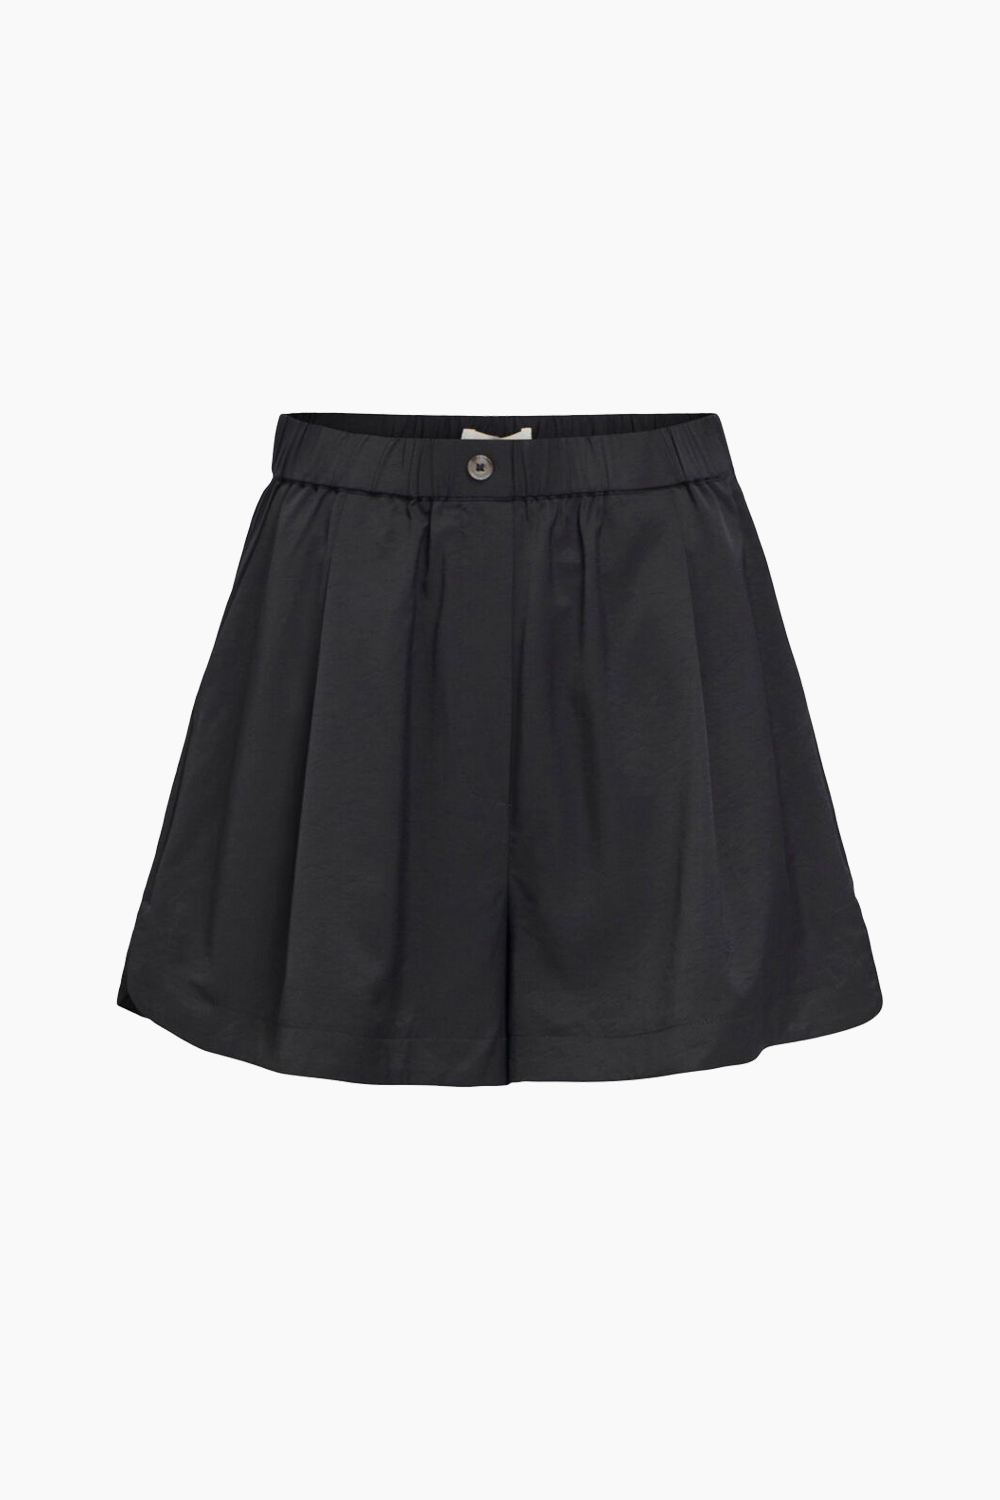 Objlagan HW Shorts - Black - Object - Sort S